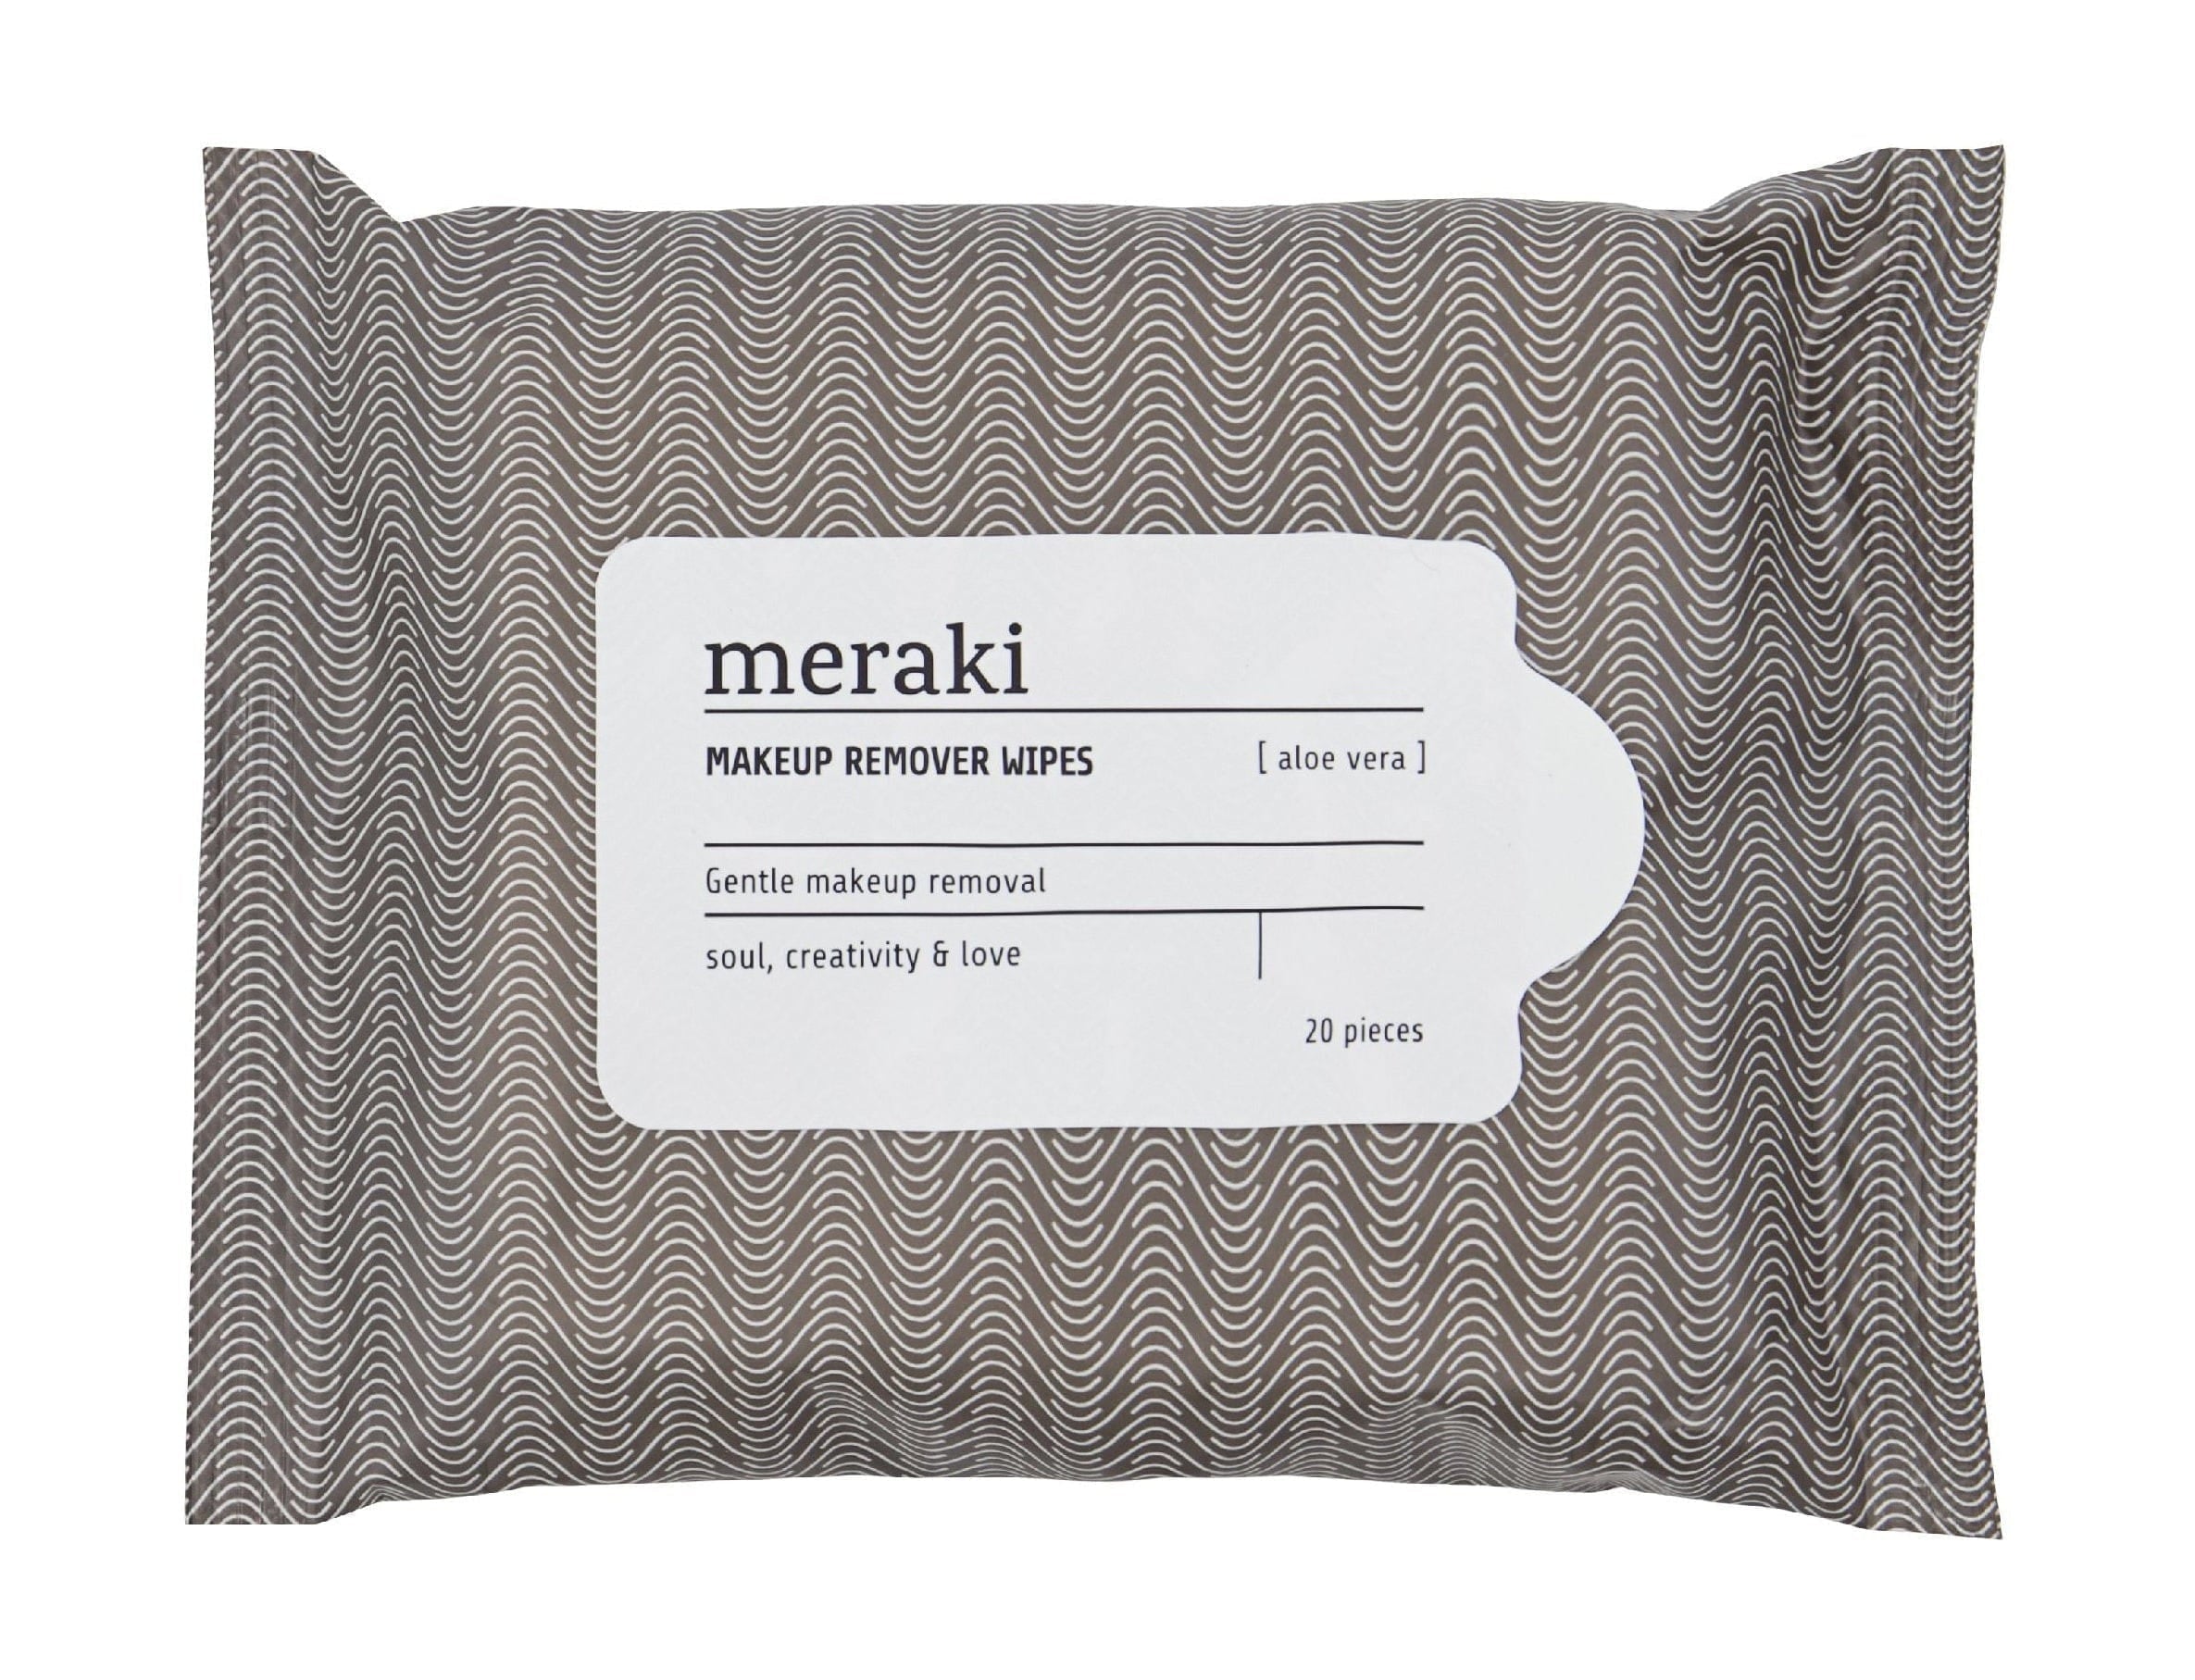 Meraki Makeup Remover Wipes Aloe Vera 20 pezzi., Caldo grigio/bianco